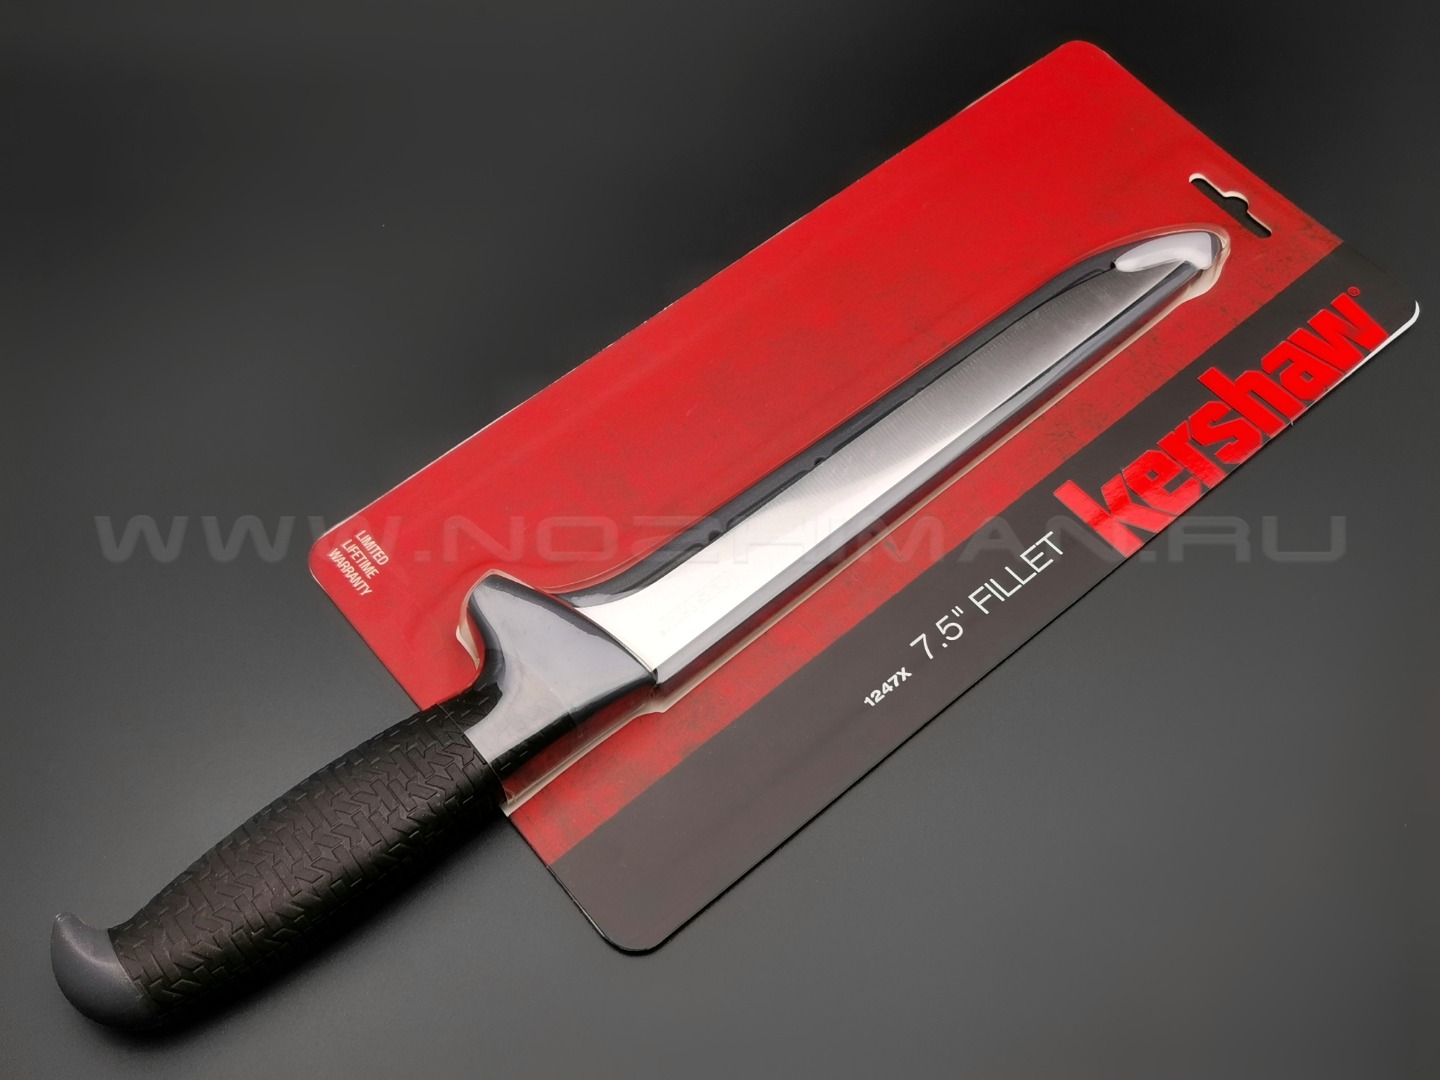 Филейный нож Kershaw 7.5 Fillet 1247X сталь 420J2, рукоять Glass-filled Nylon